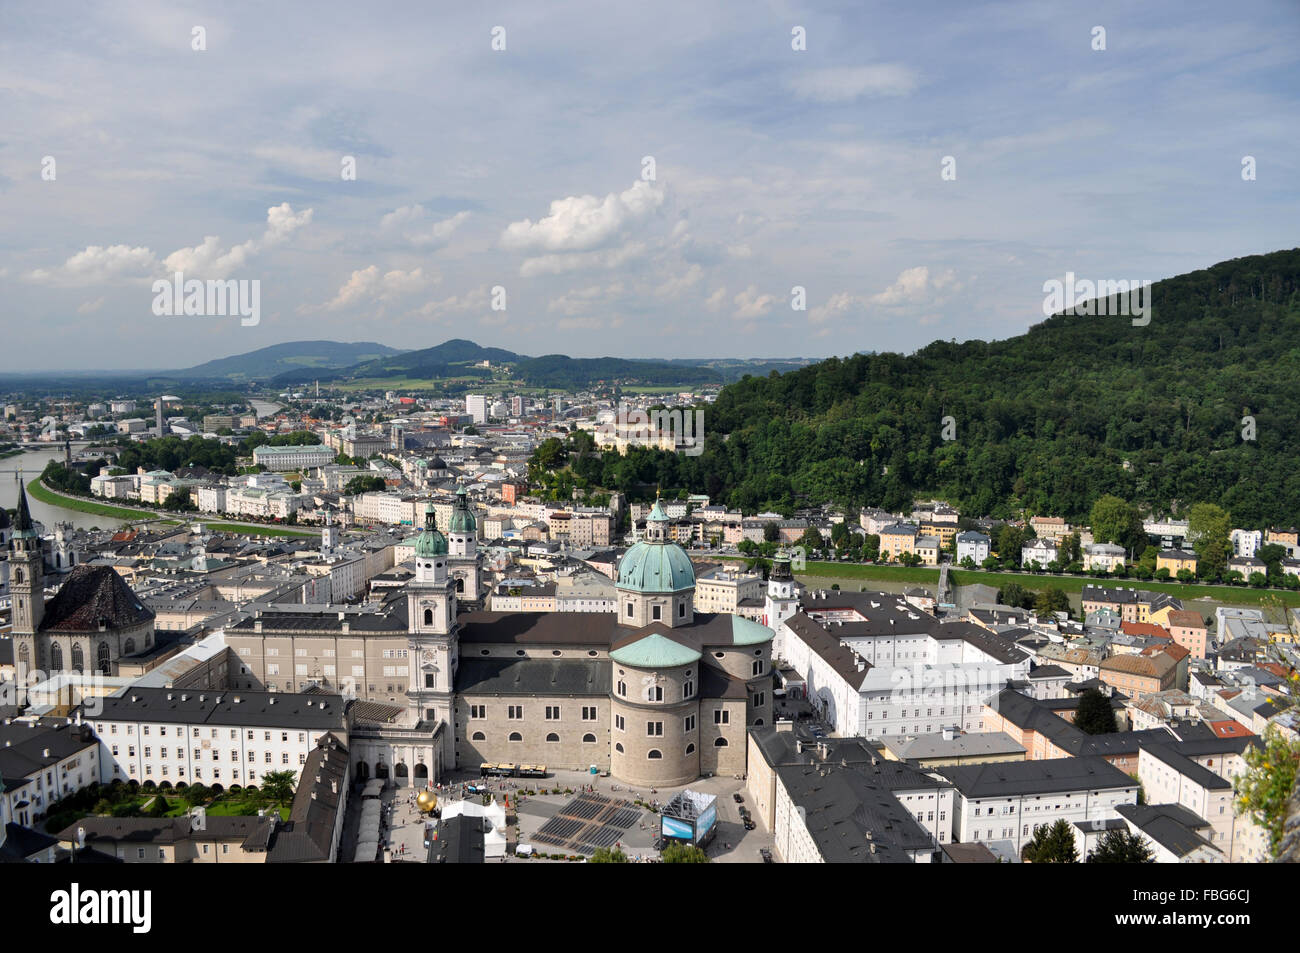 Salzburg (German pronunciation: [ˈzaltsbʊɐ̯k] (About this sound